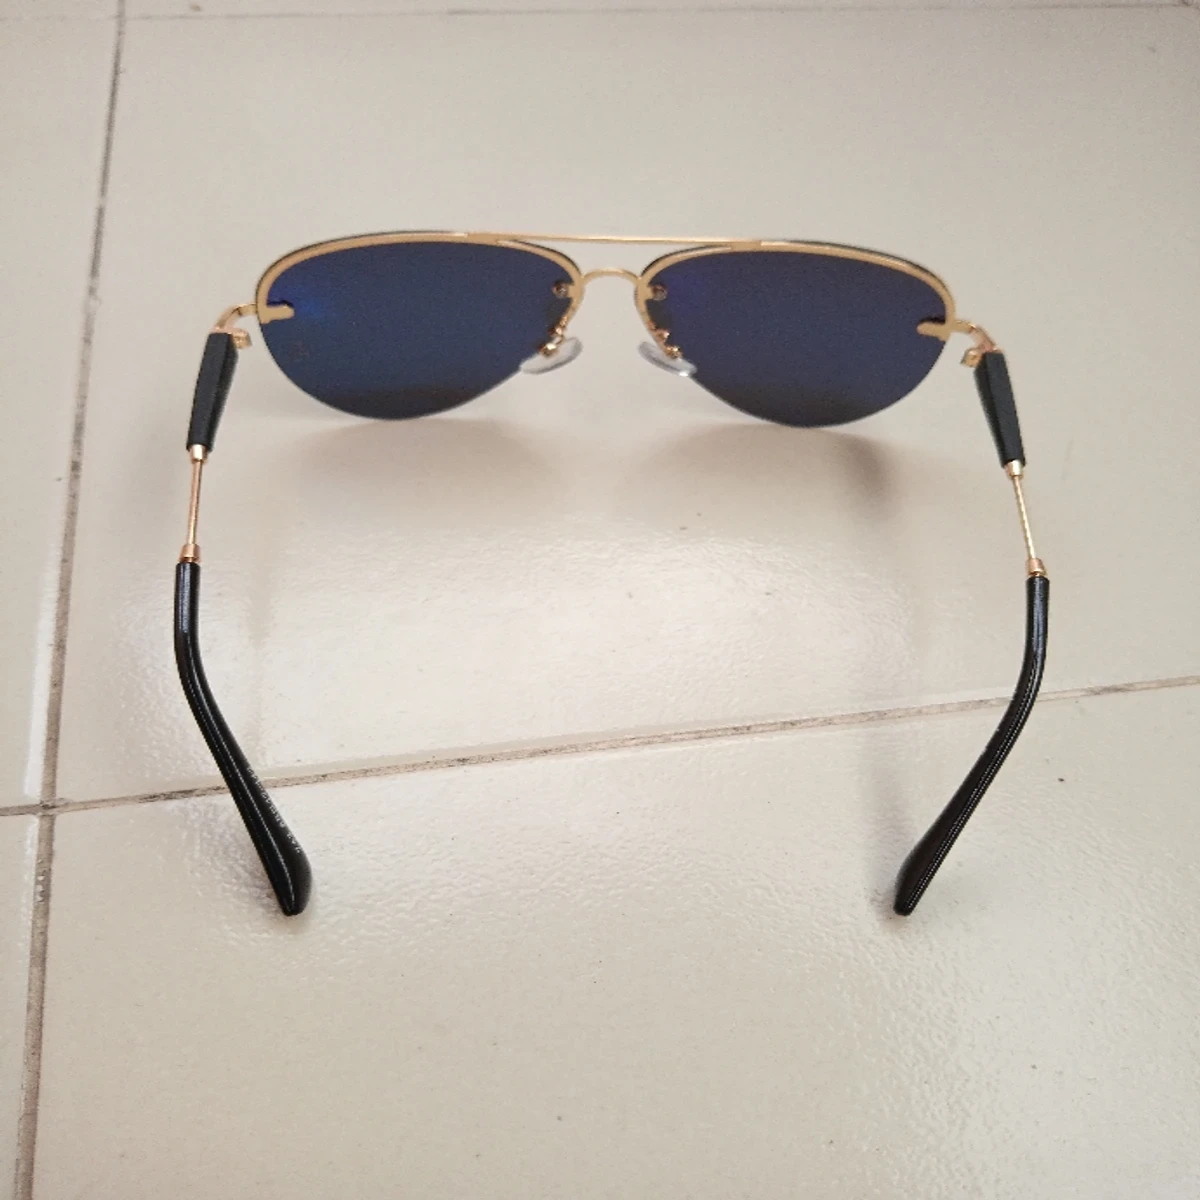 (Bmw)SUNGLASSES Men polarized Driving Sunglasses New